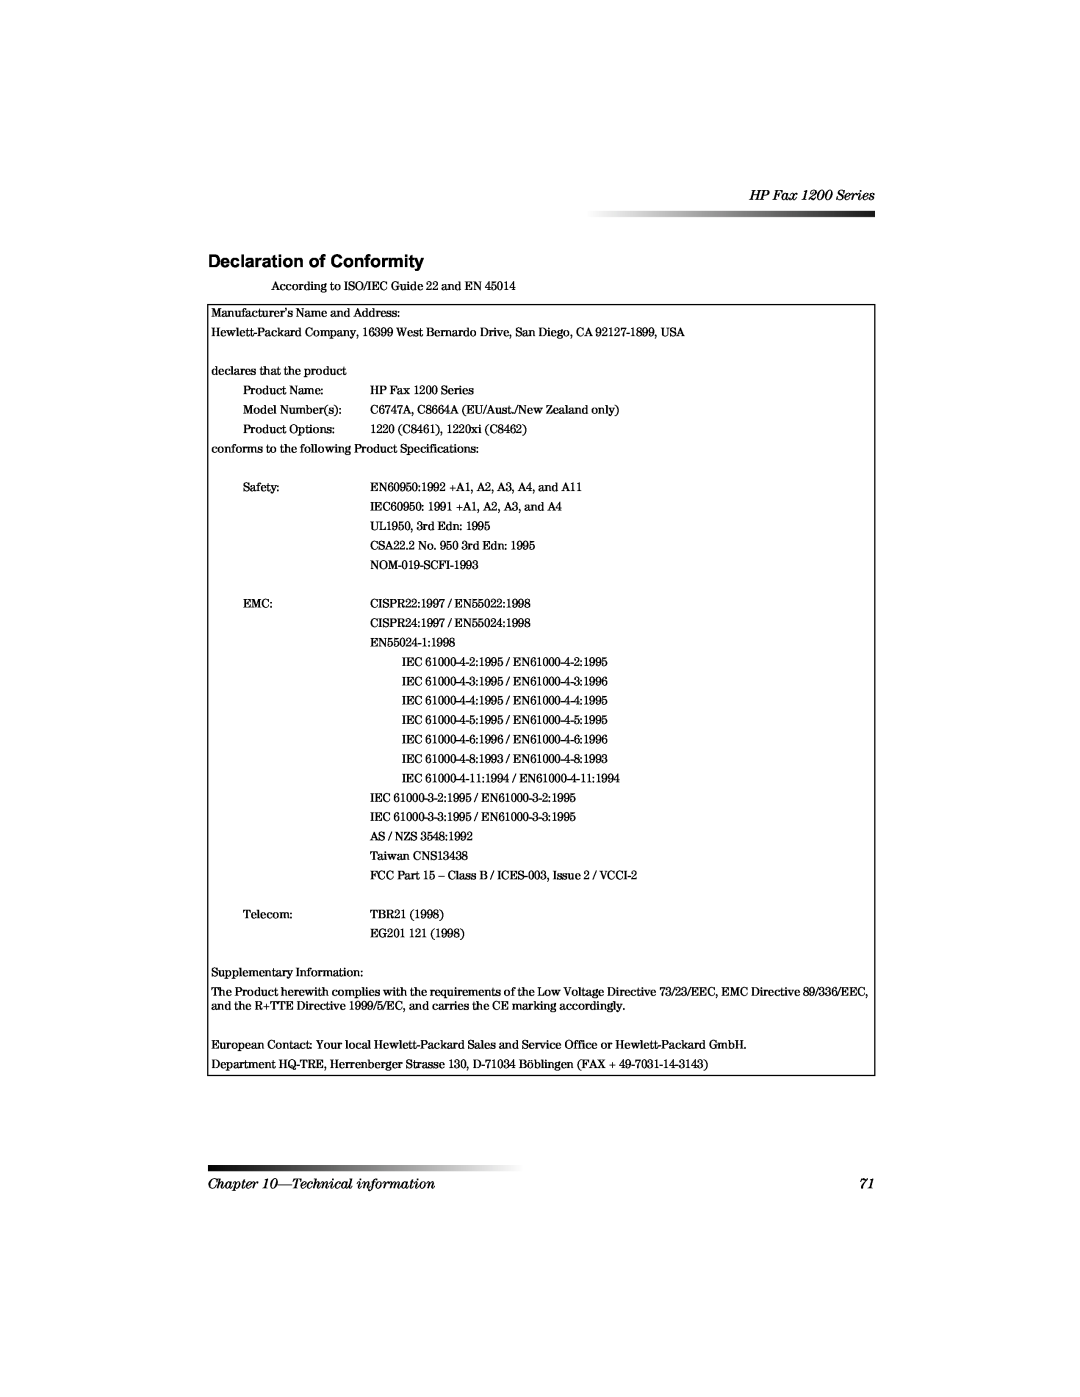 HP 1220 Fax manual Hfodudwlrqri&Rqiruplw, HP Fax 1200 Series, Technical information 